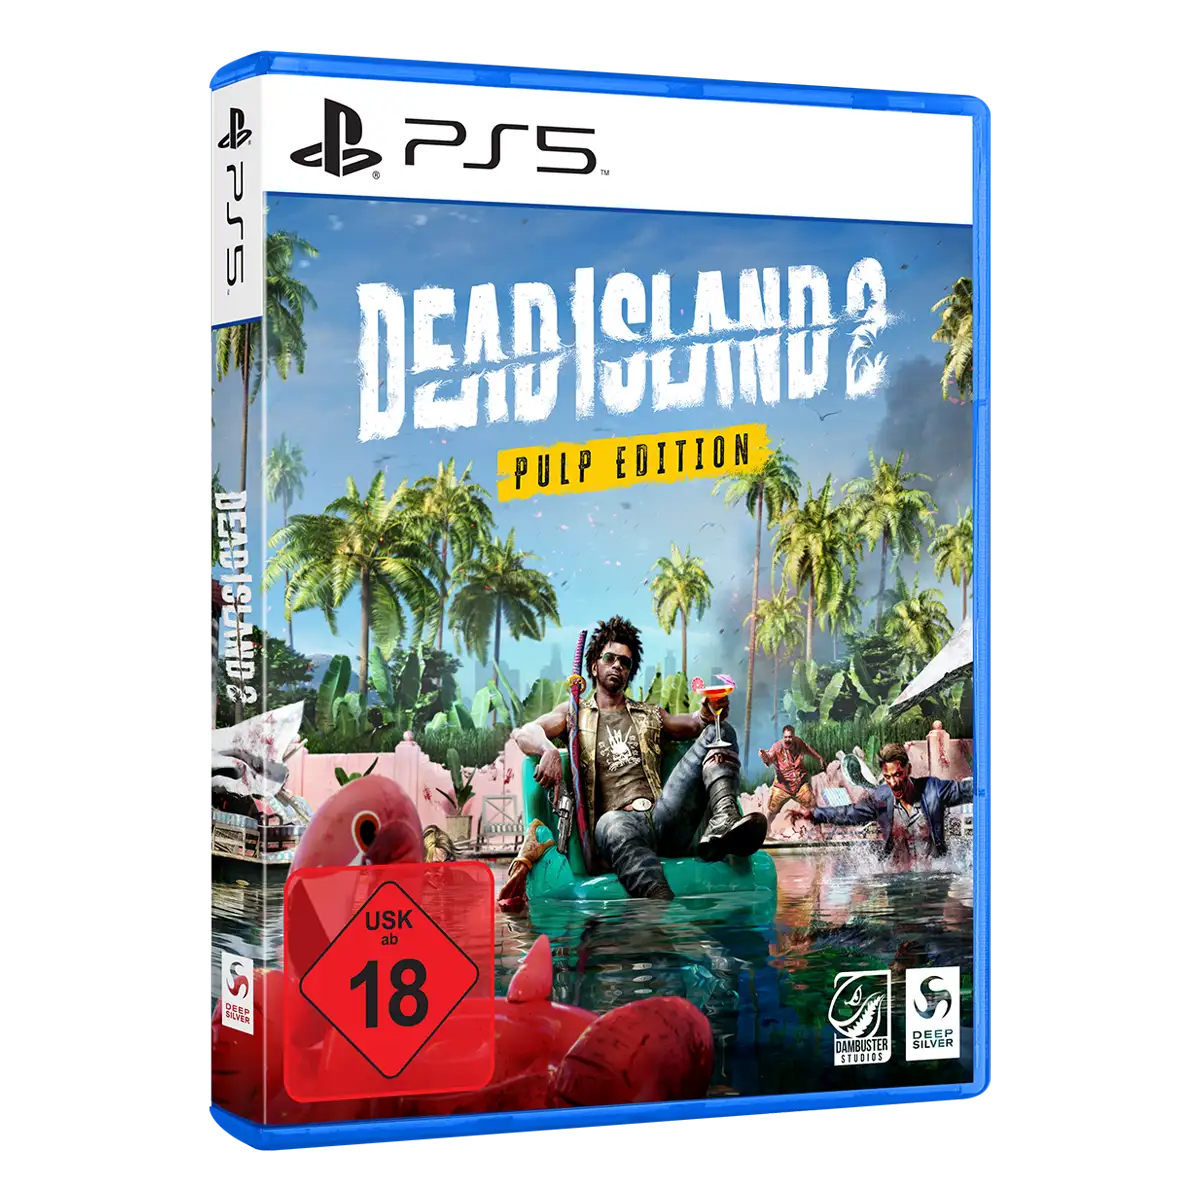 Dead Island 2 PULP Edition (PS5) (USK) Thumbnail 2